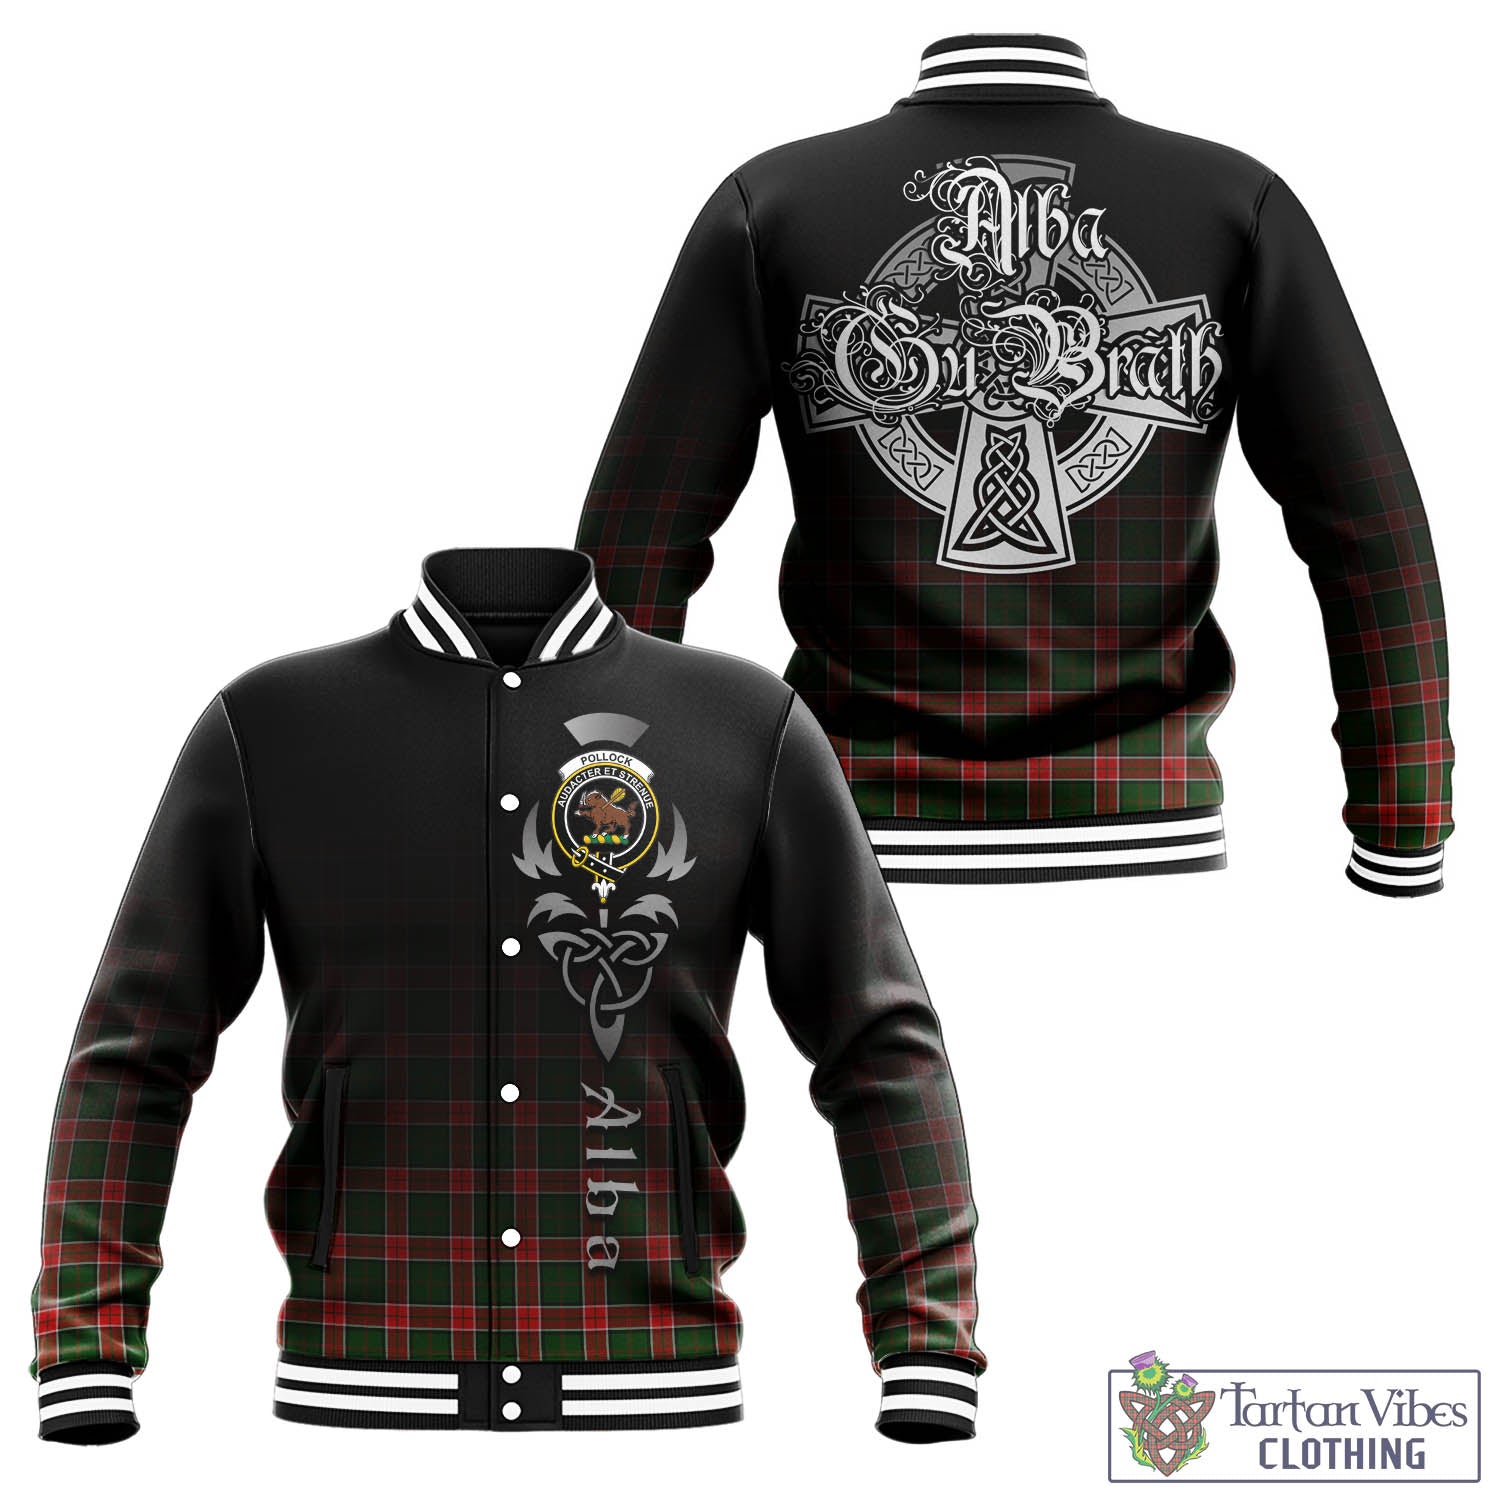 Tartan Vibes Clothing Pollock Modern Tartan Baseball Jacket Featuring Alba Gu Brath Family Crest Celtic Inspired